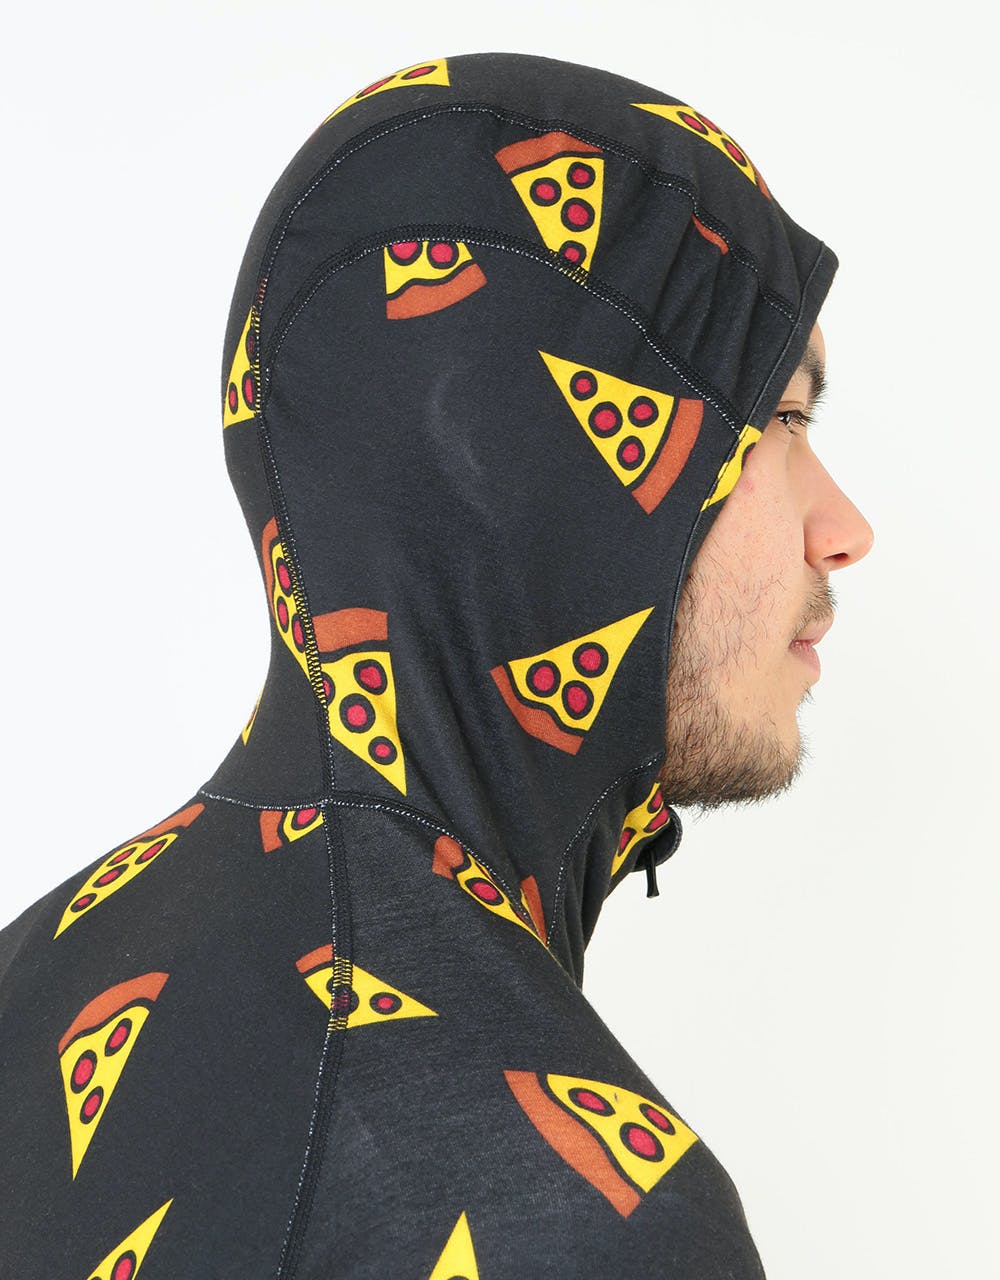 Airblaster Classic Ninja Suit - Pizza